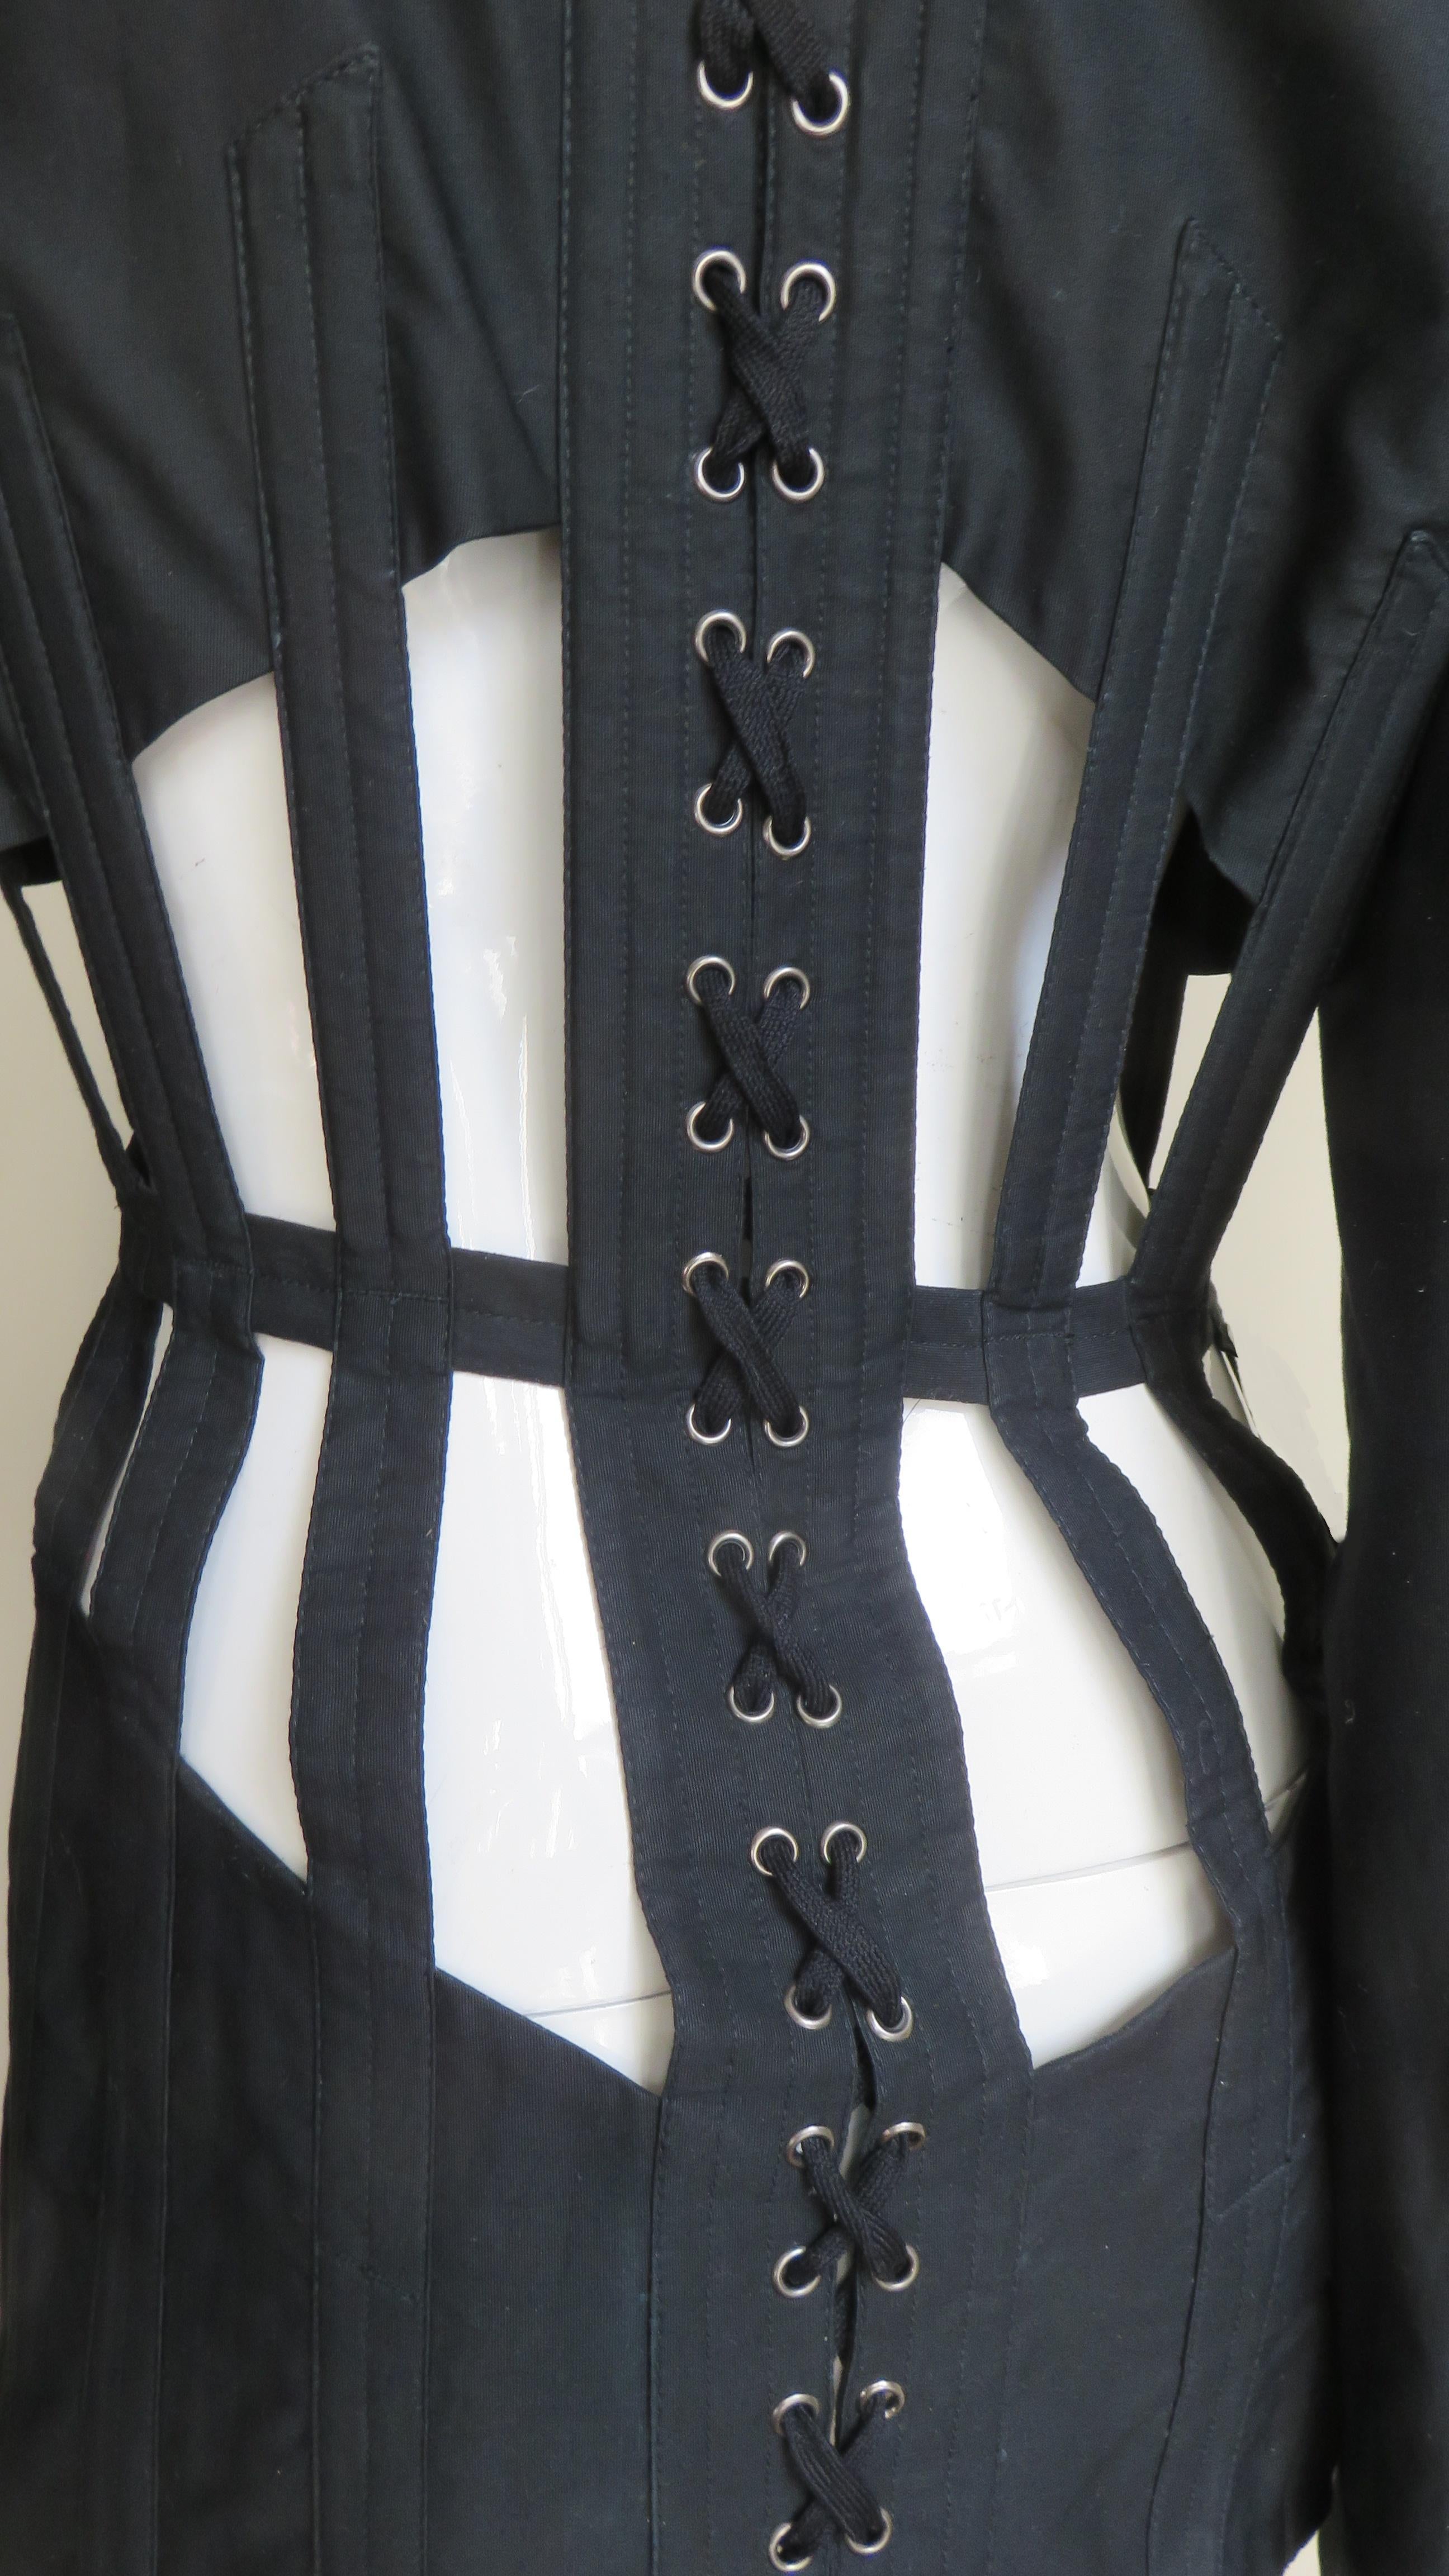 Jean Paul Gaultier Iconic Cage Corset lace up Jacket Pant Suit S/S 1989 For Sale 11